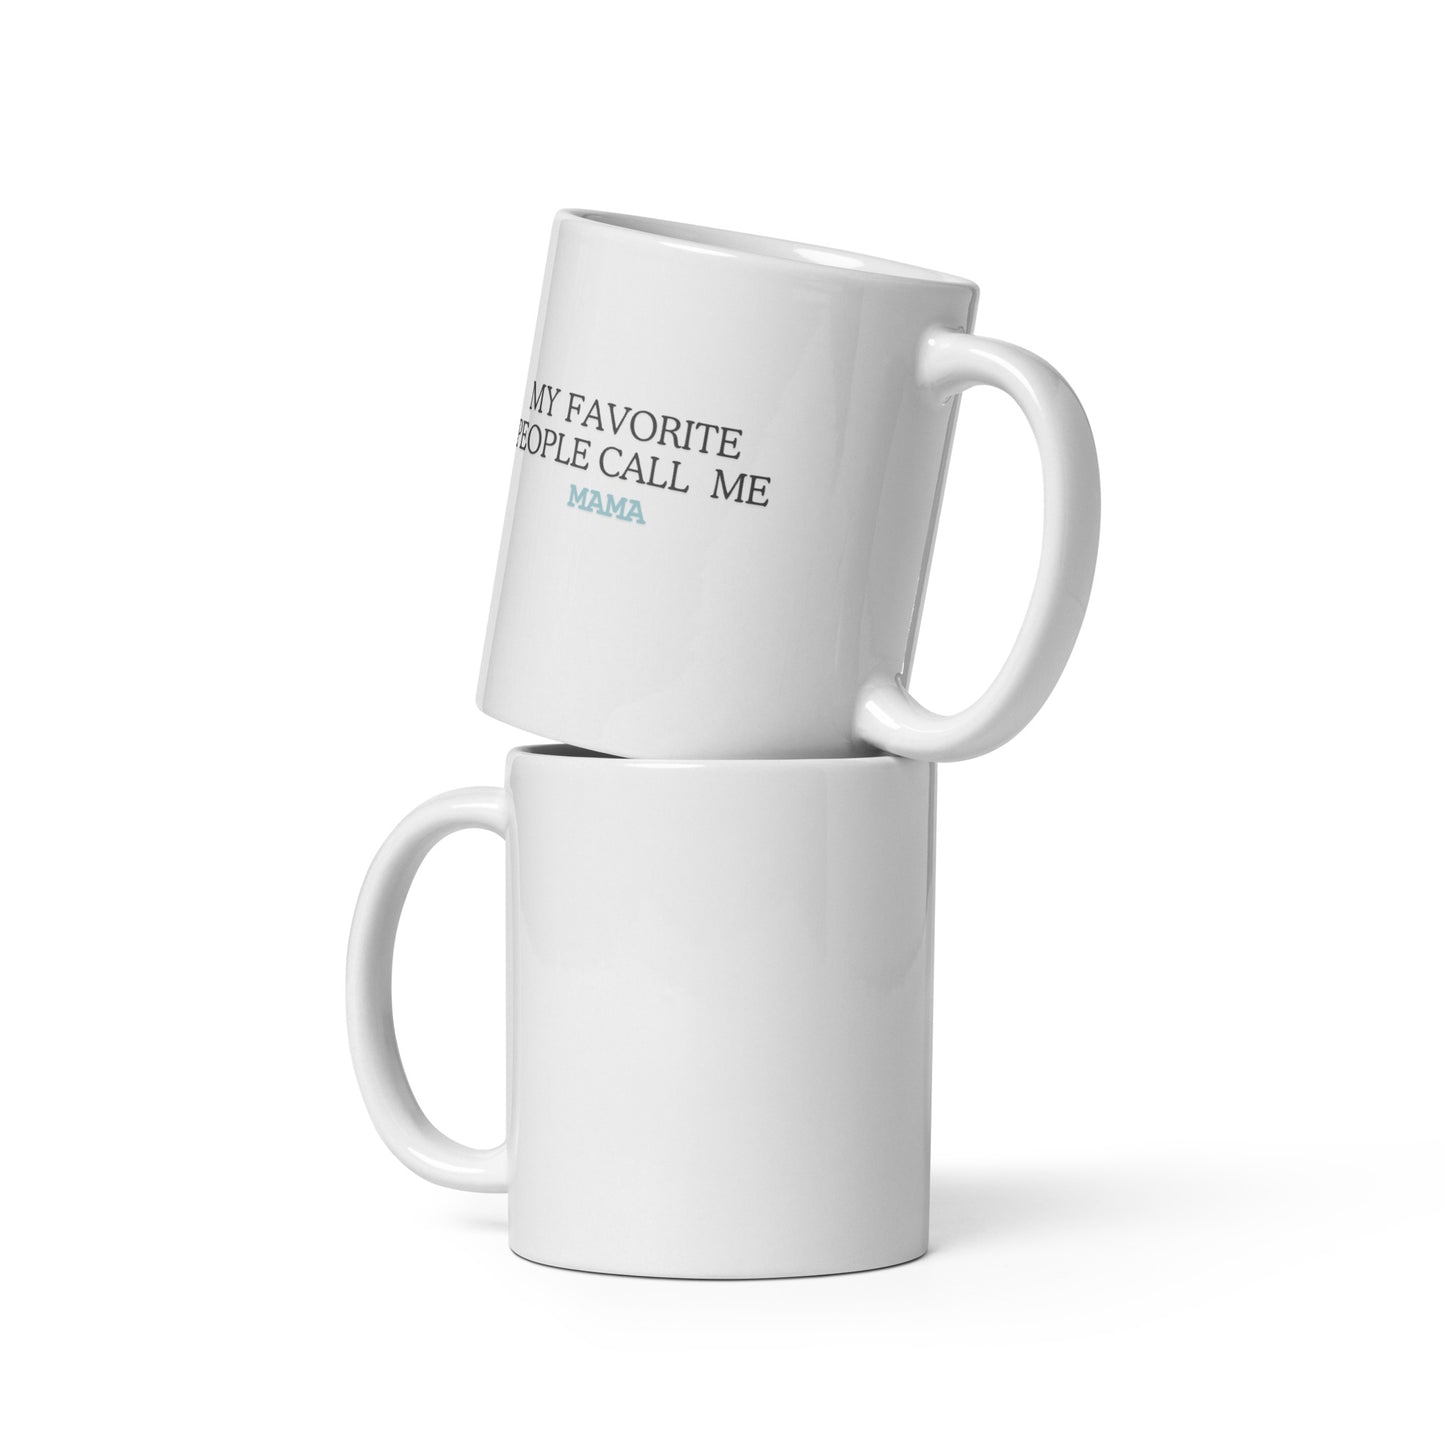 MY-FAVORITE-PPL-CALL-ME-MAMA White glossy mug